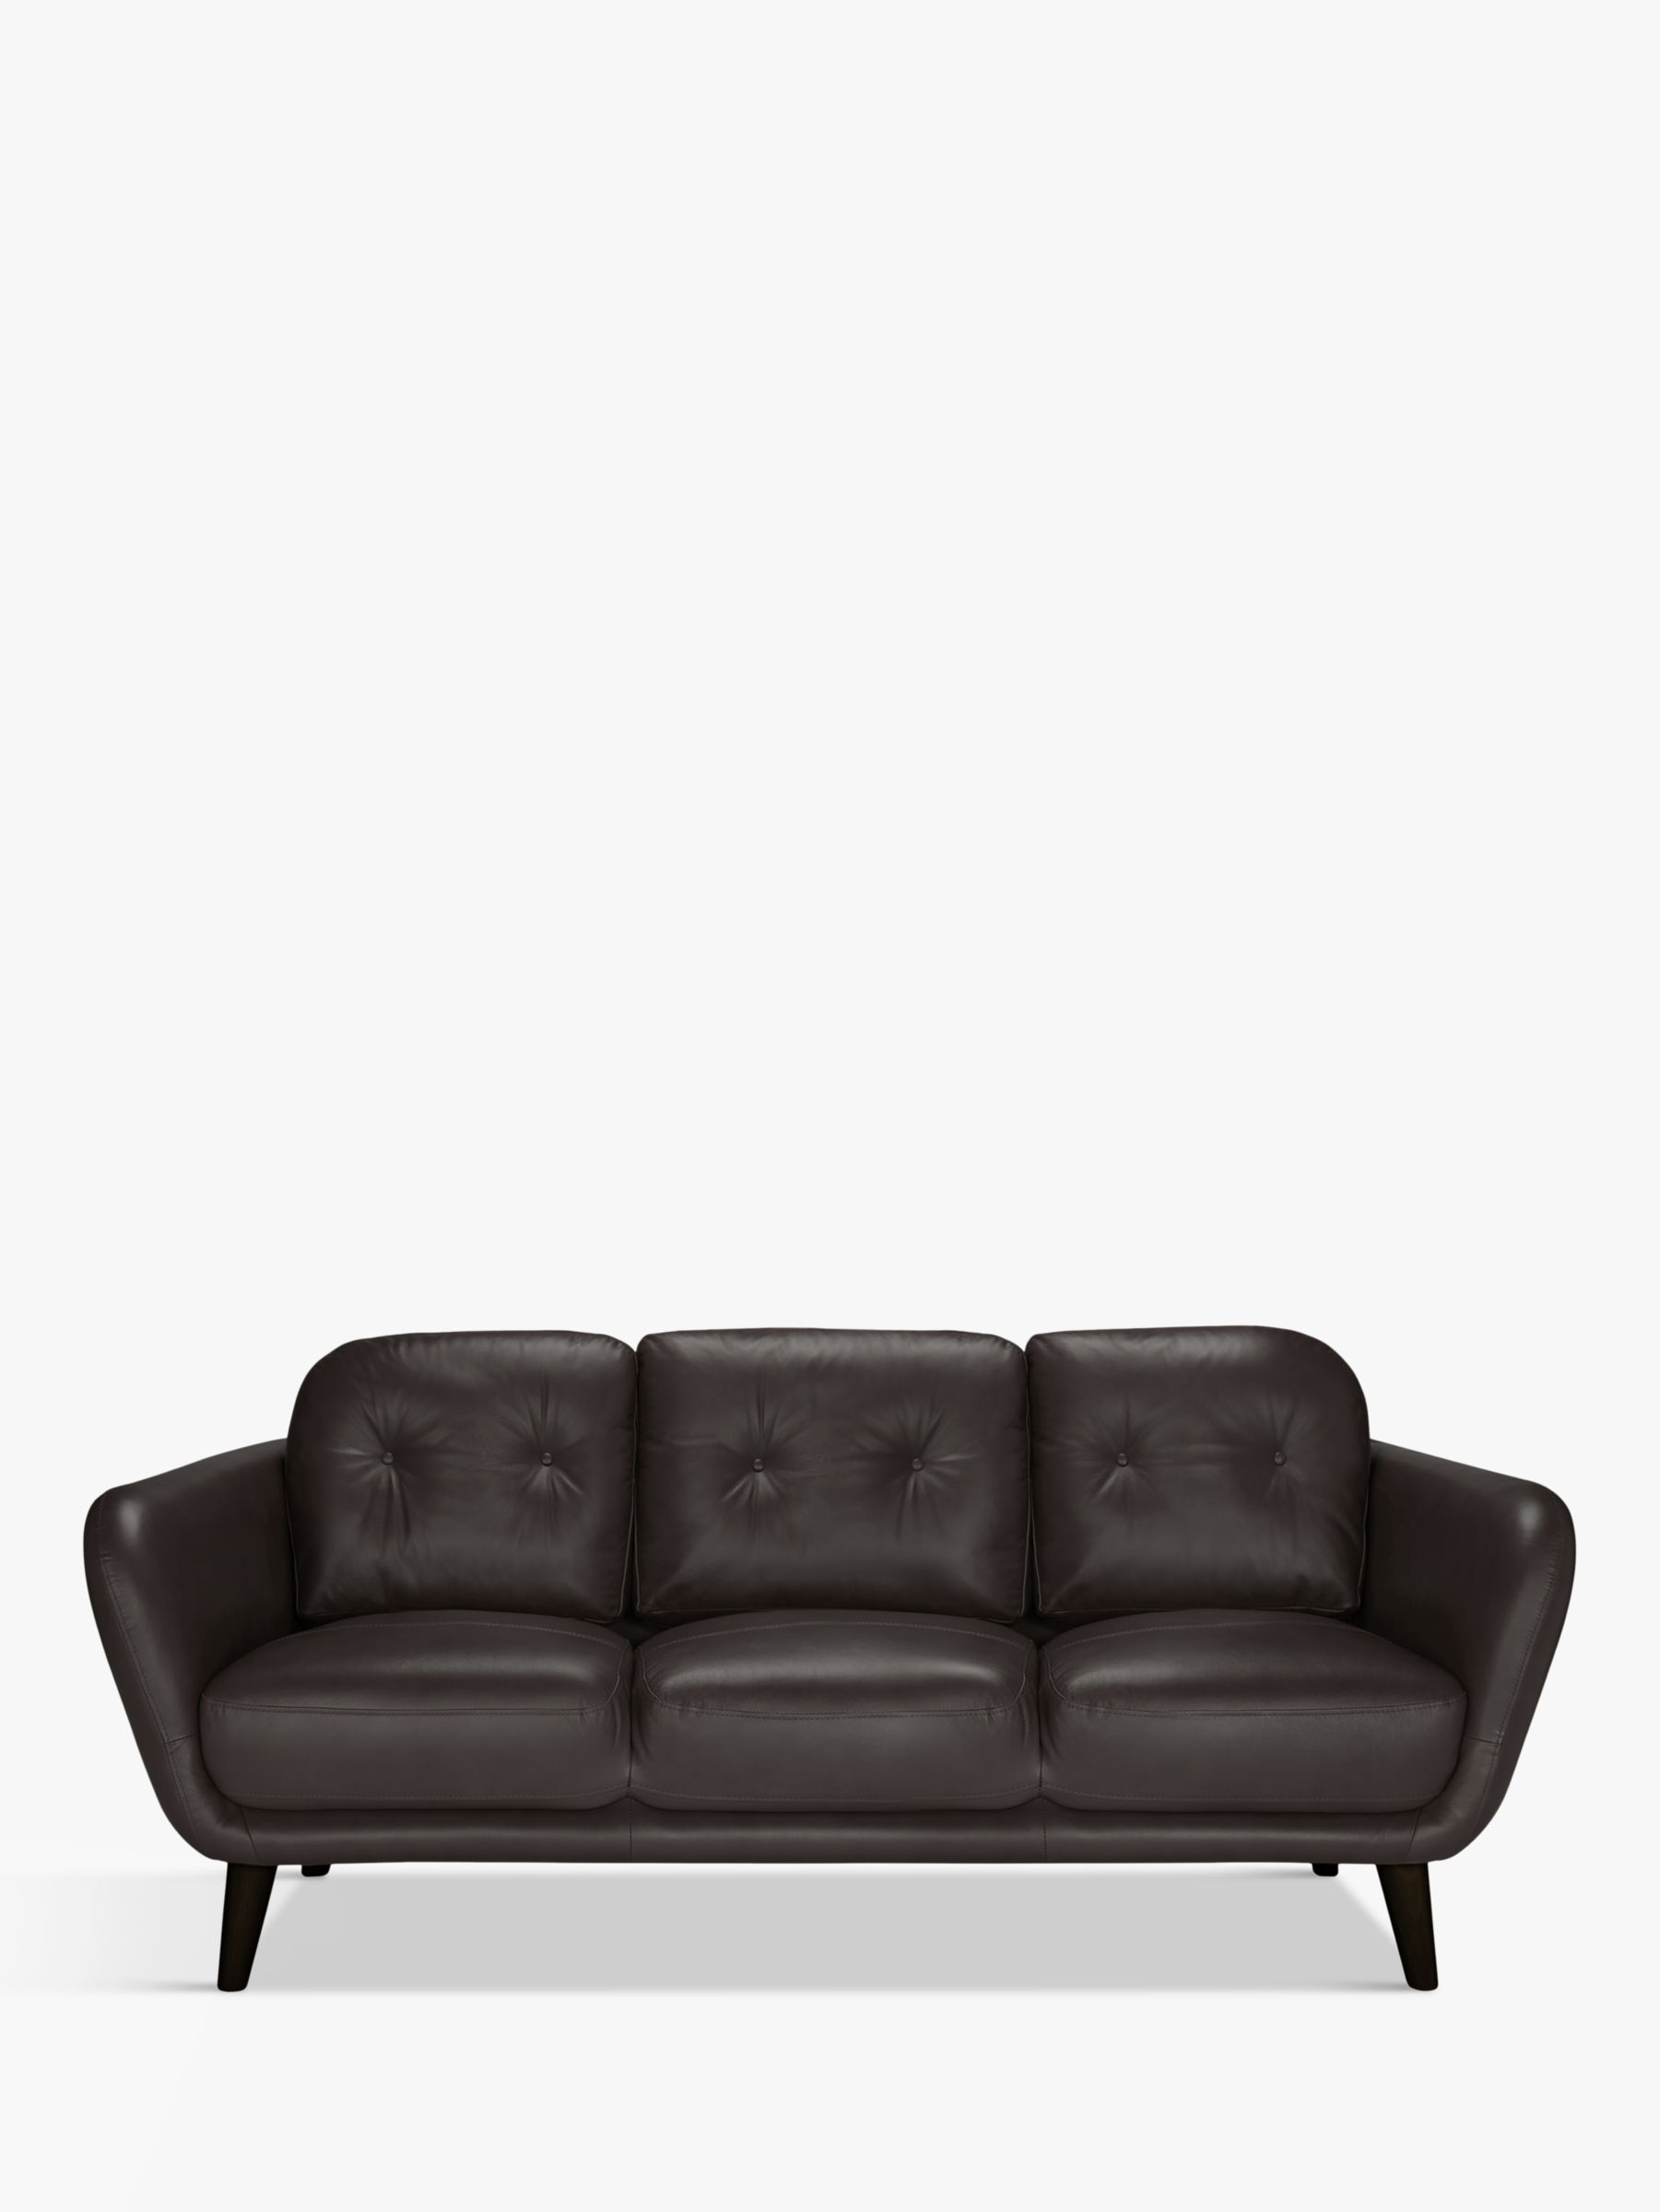 Arlo Range, John Lewis Arlo Large 3 Seater Leather Sofa, Dark Leg, Demetra Charcoal